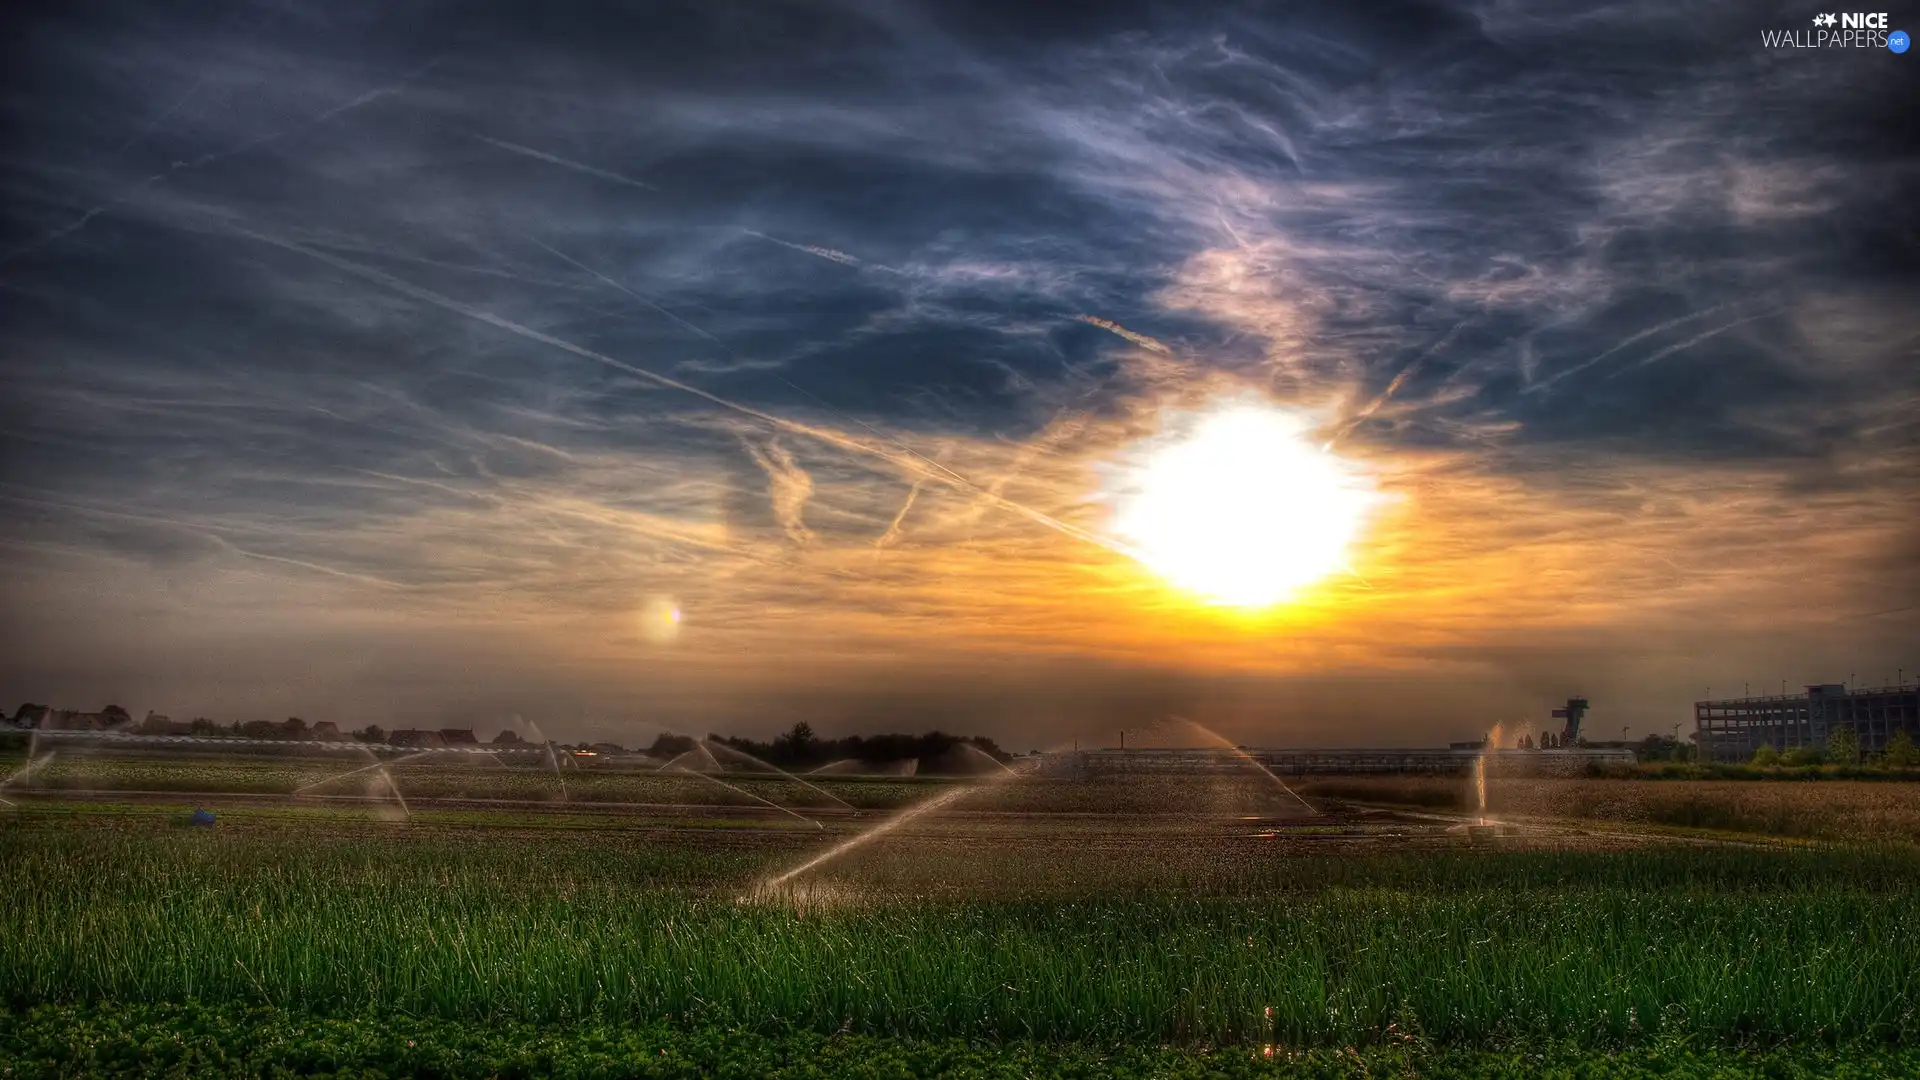 The setting, sun, Sprinkler, Sky, Field